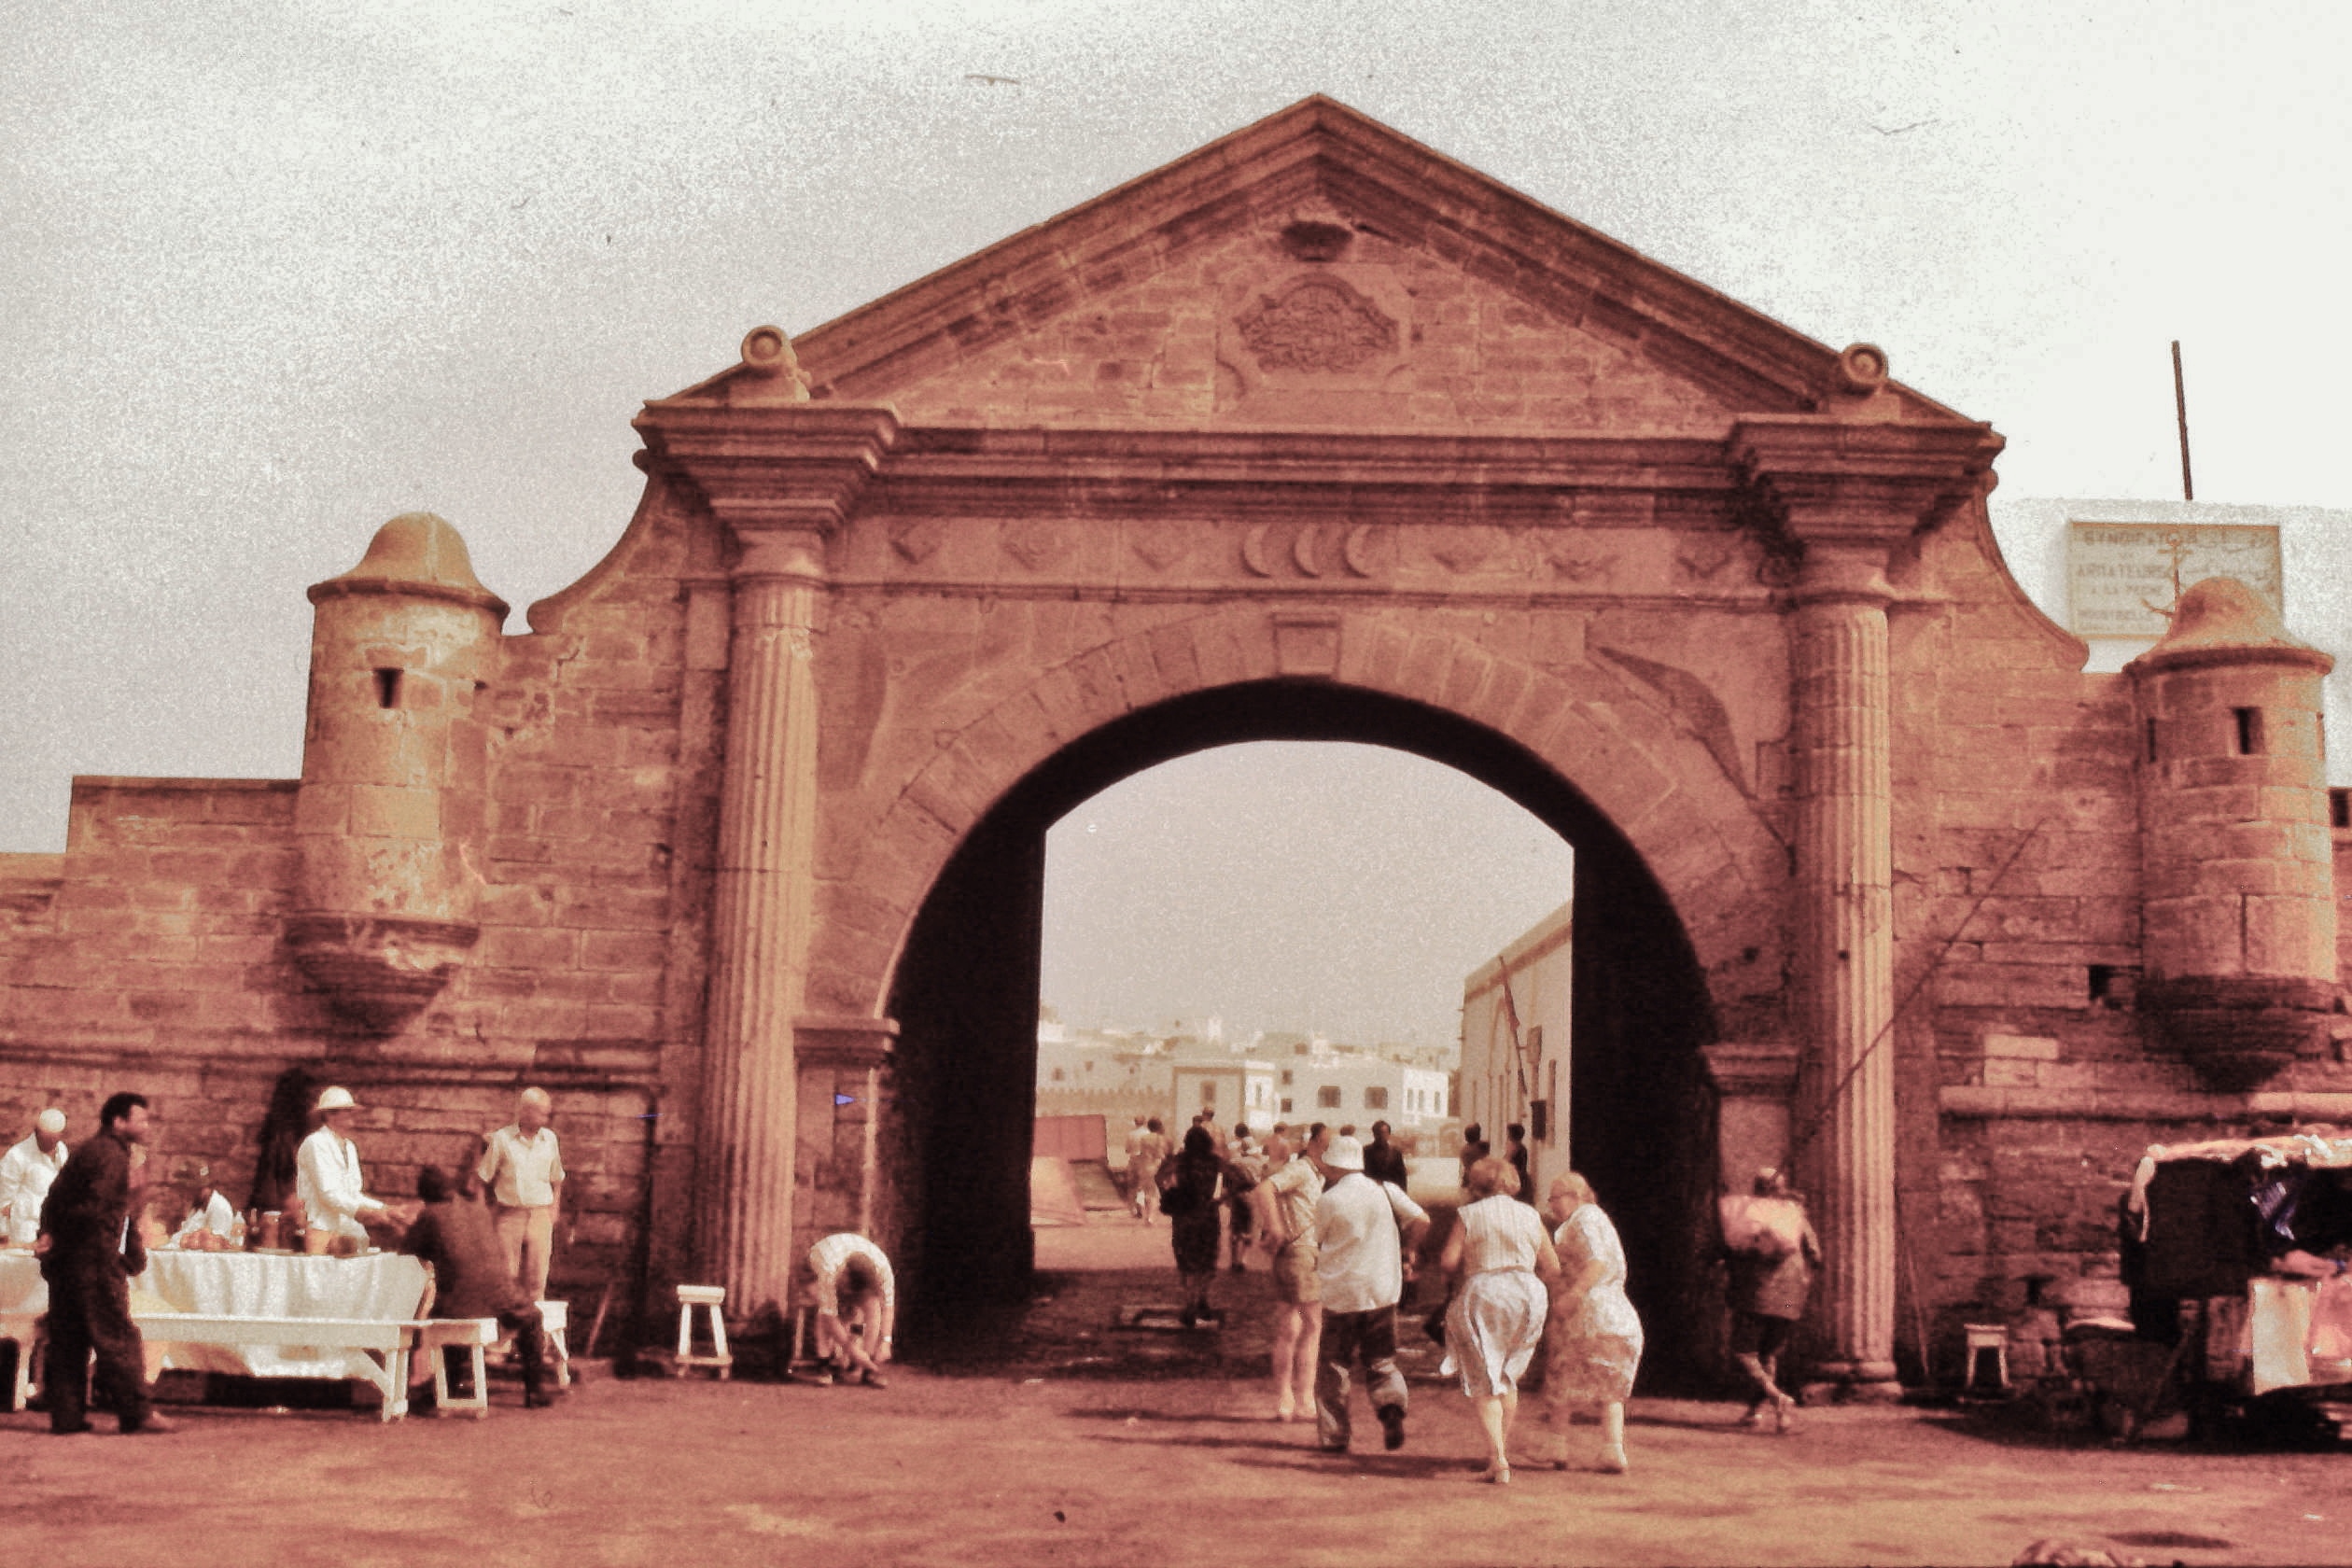 File:Morocco street scene with city gate 2.JPG - Wikimedia Commons